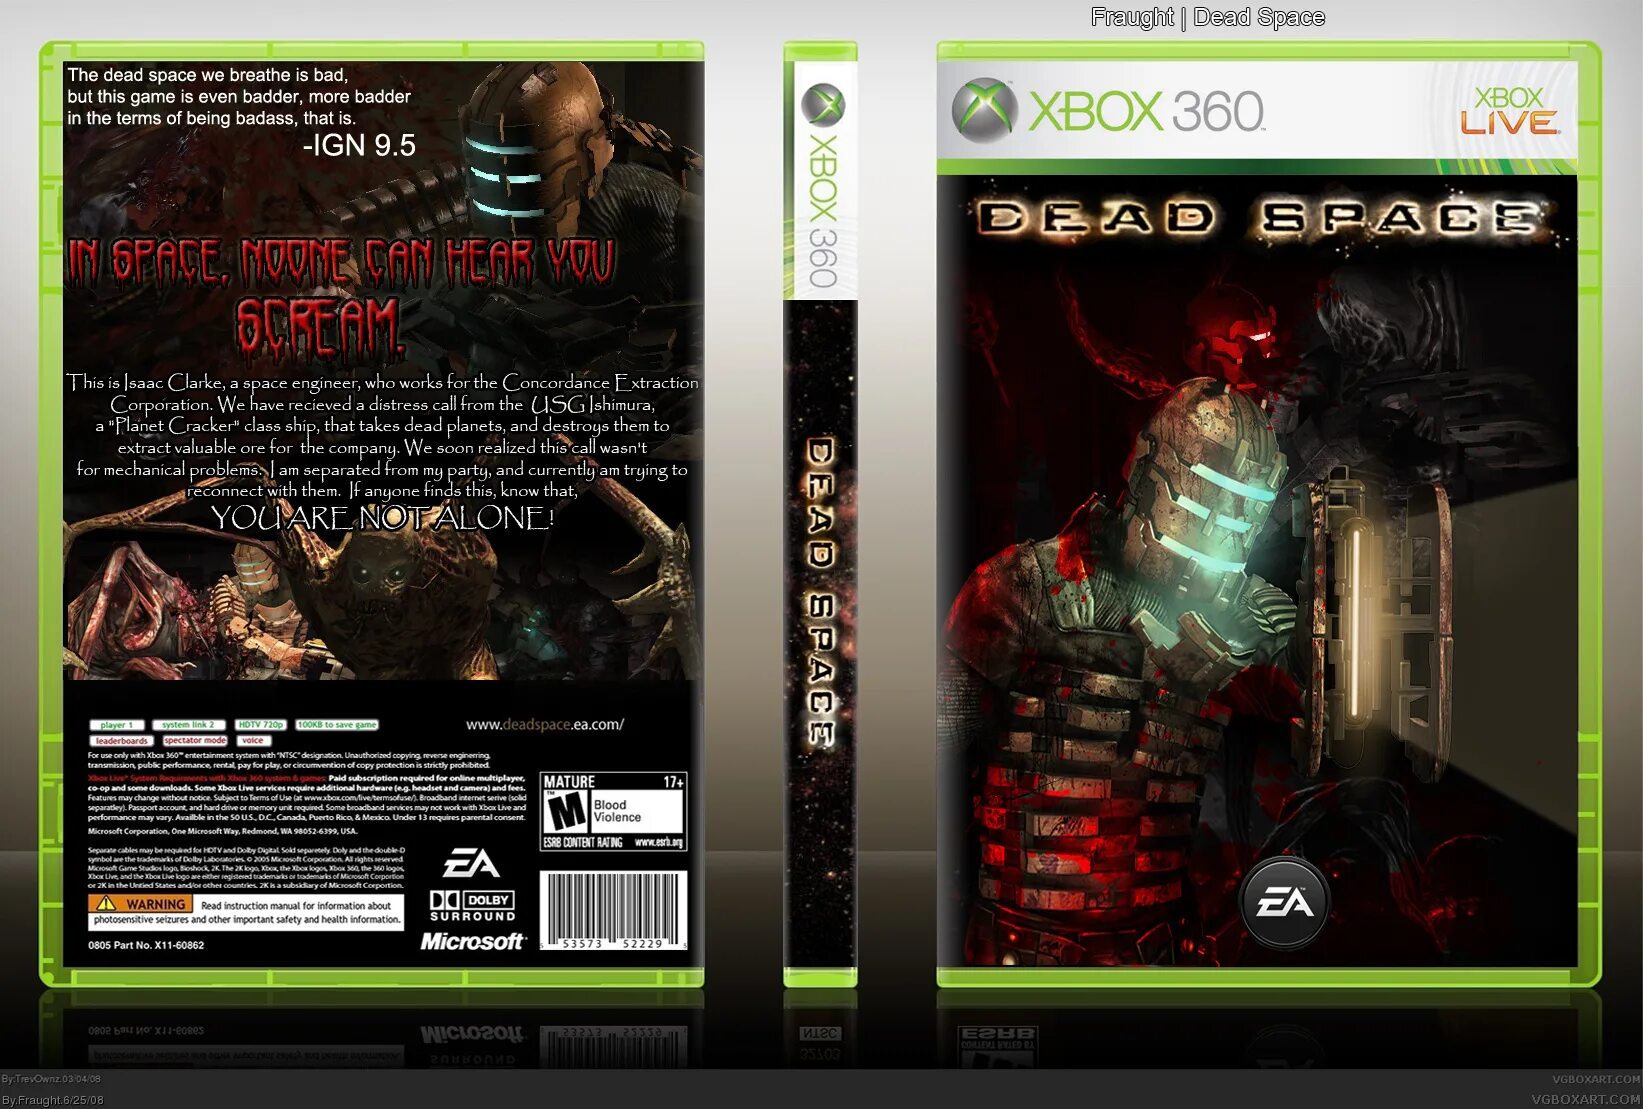 Dead Space Xbox 360 обложка. Дед Спейс диск на иксбокс 360. Диск Dead Space 2 Xbox 360. Дед Спейс на Икс бокс 360.